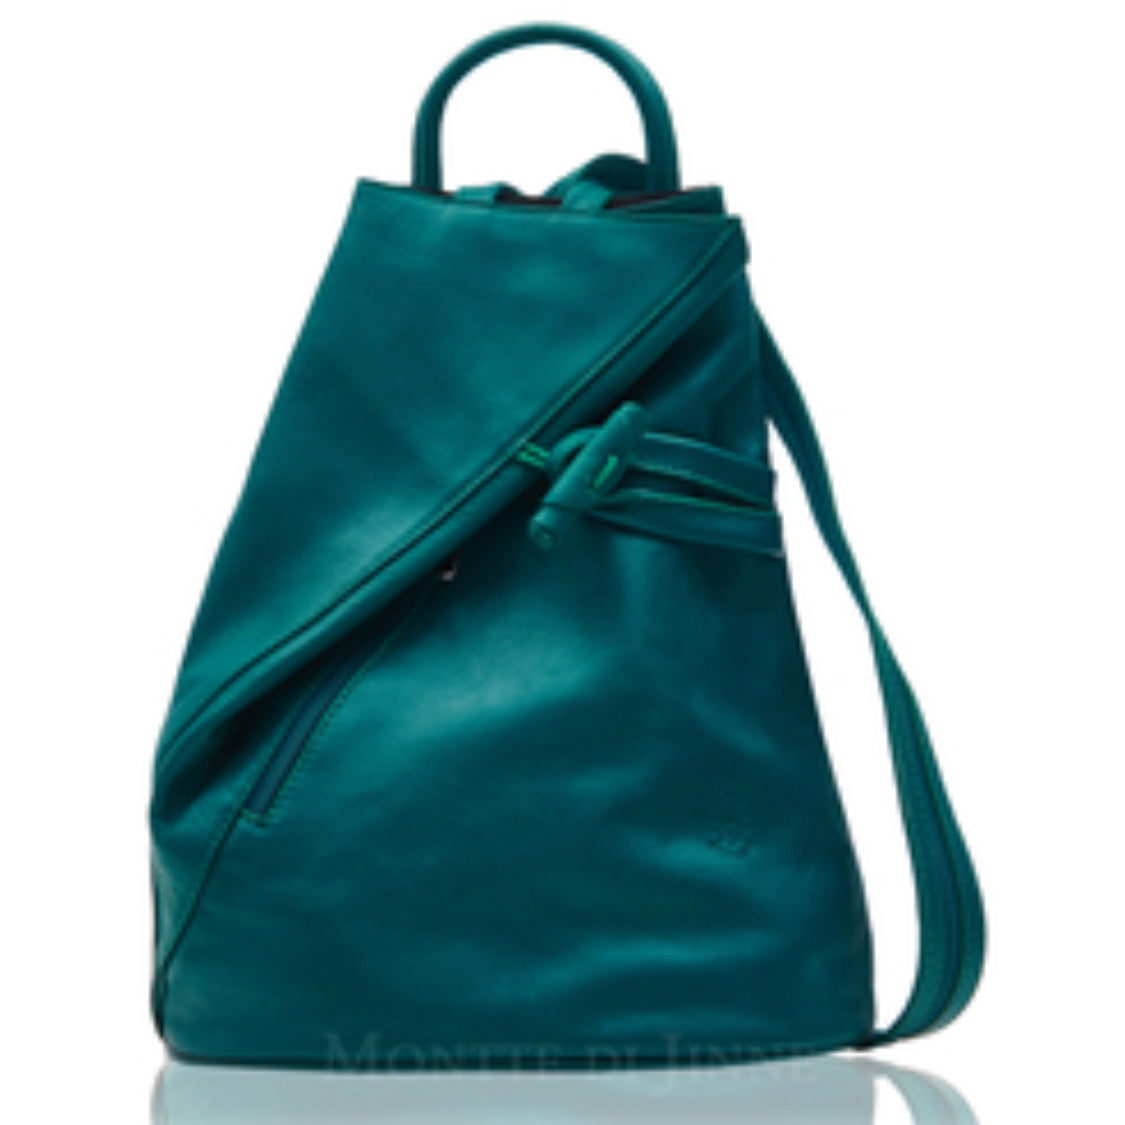 Italian Leather Toggle Rucksack Bag